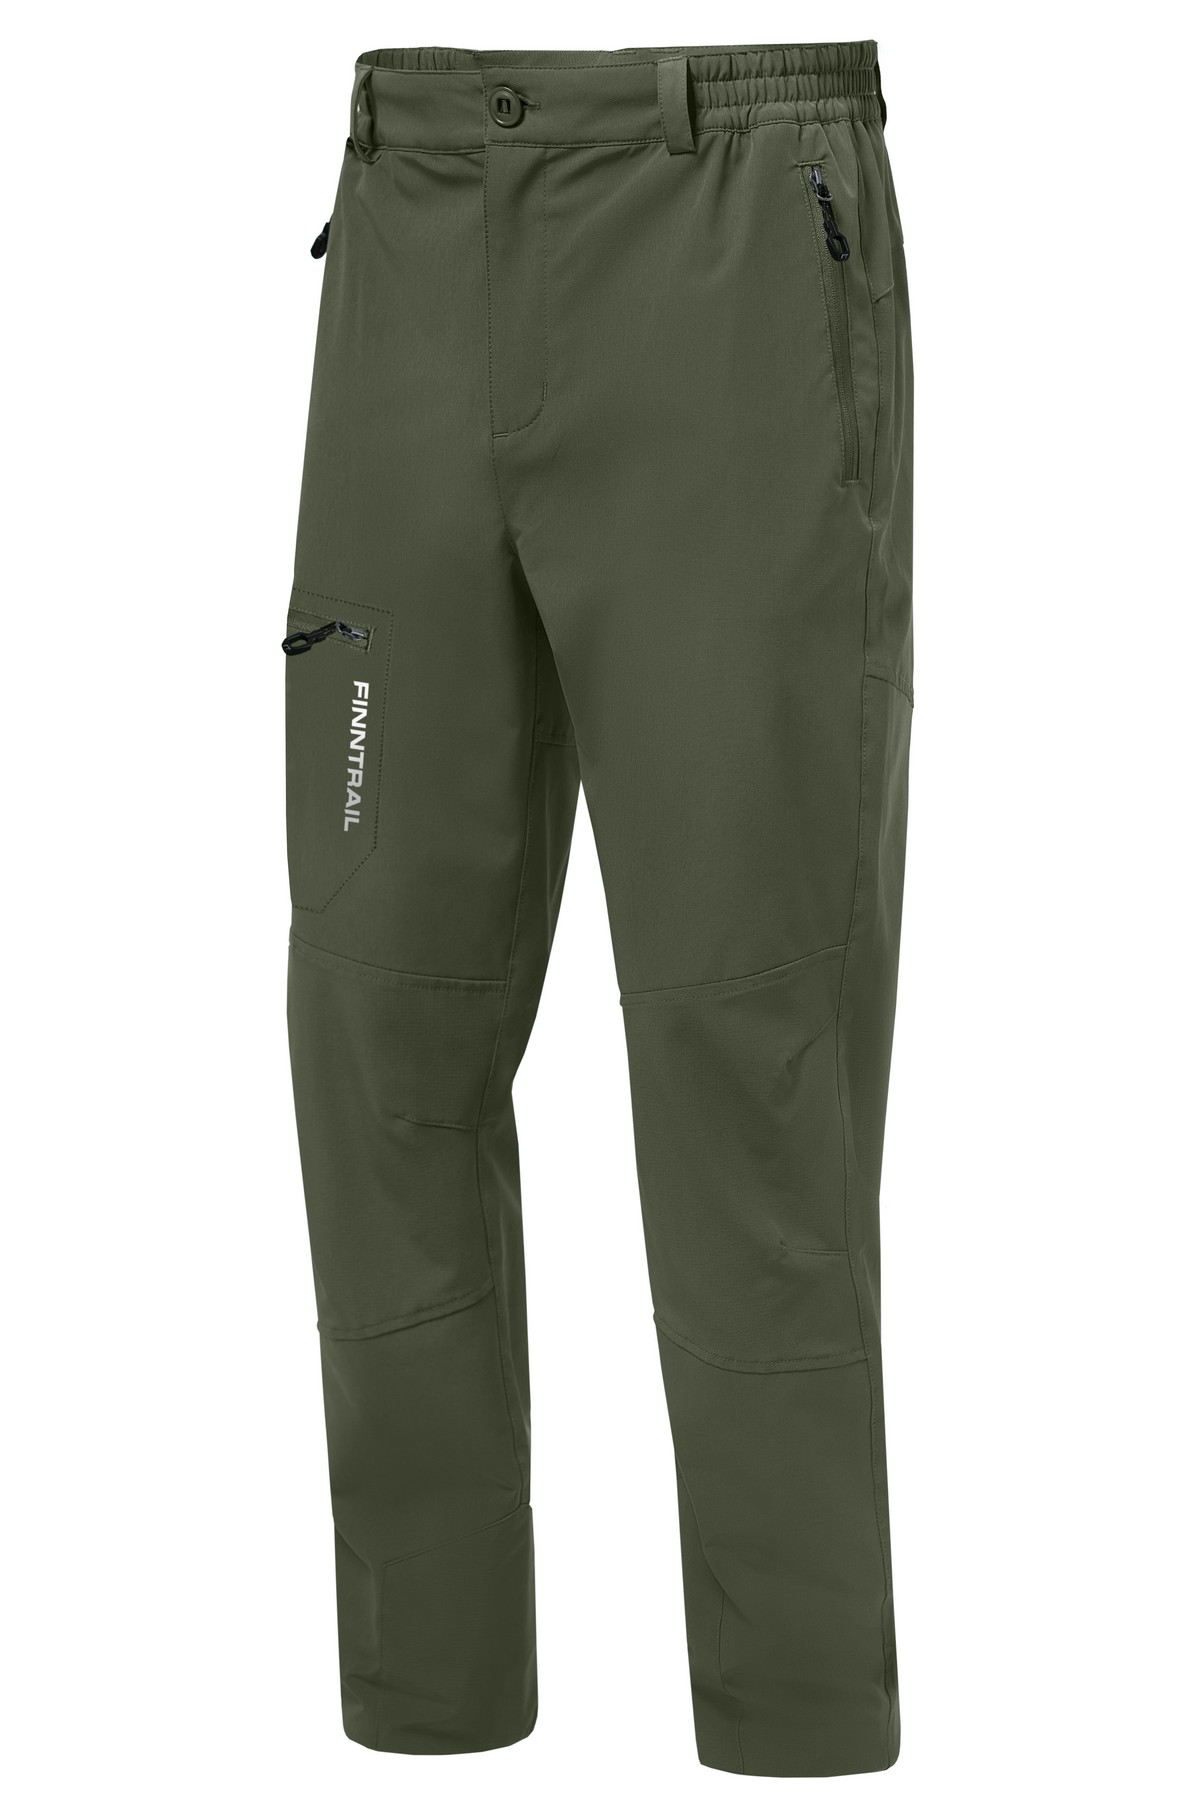 Спортивные брюки мужские Finntrail Wave4608 хаки XL